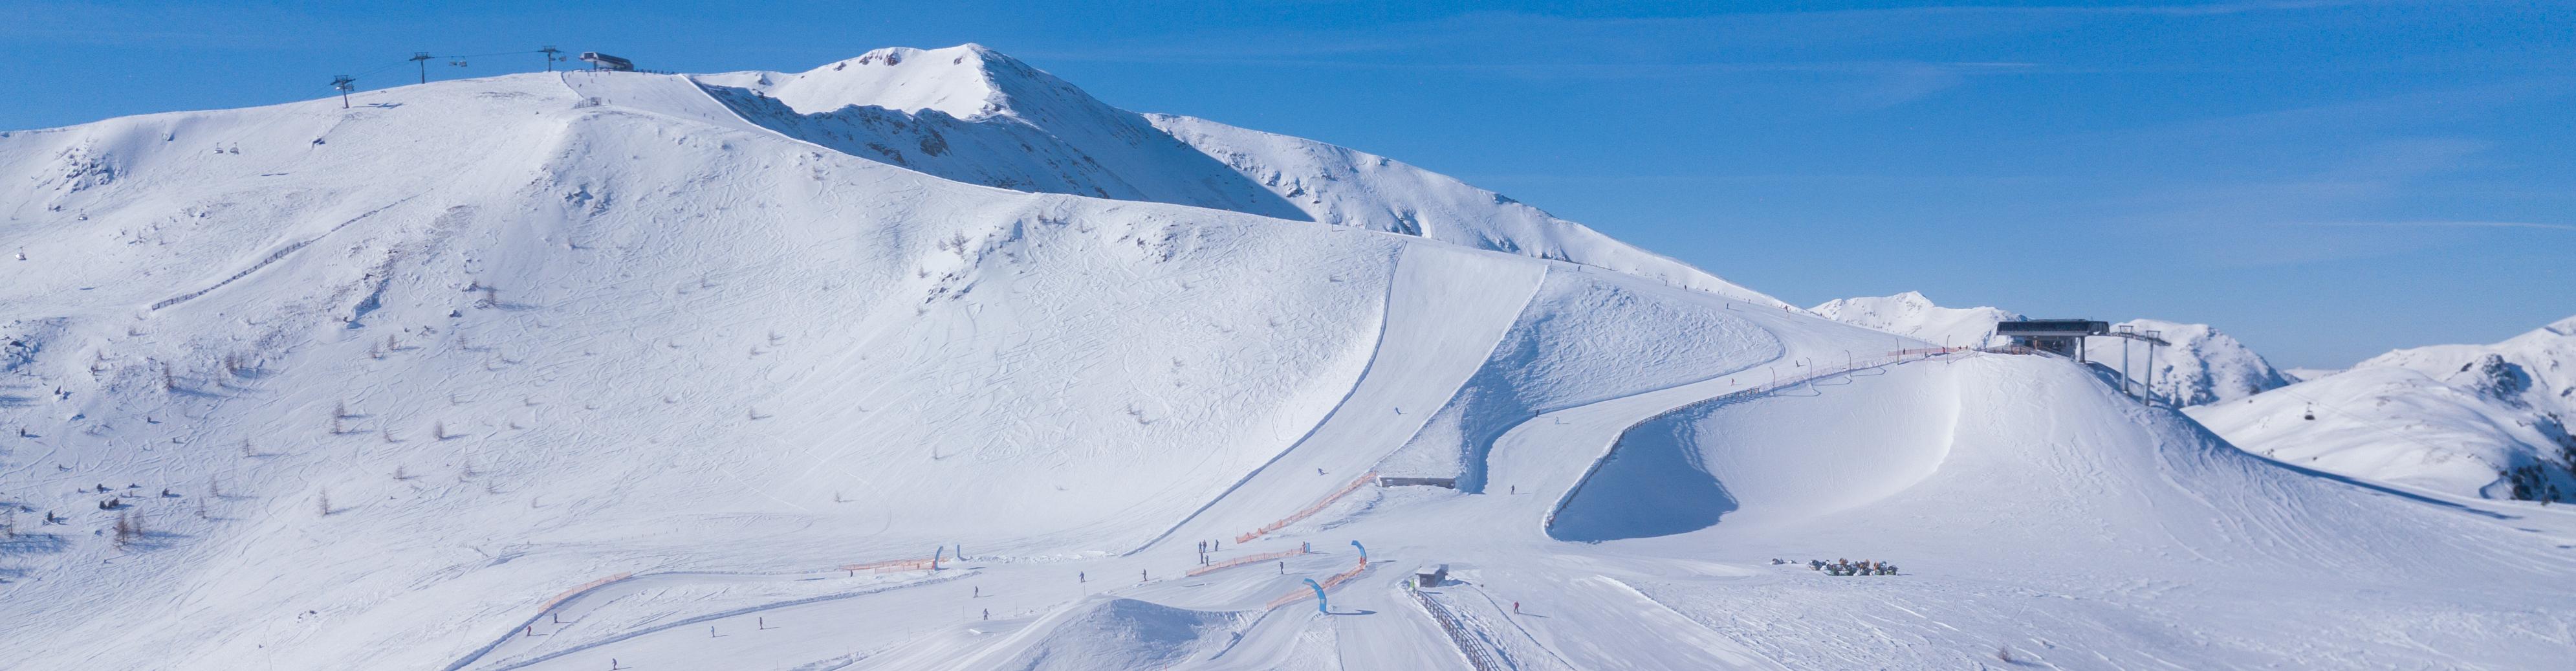 Turracher Höhe - Skischule Pertl